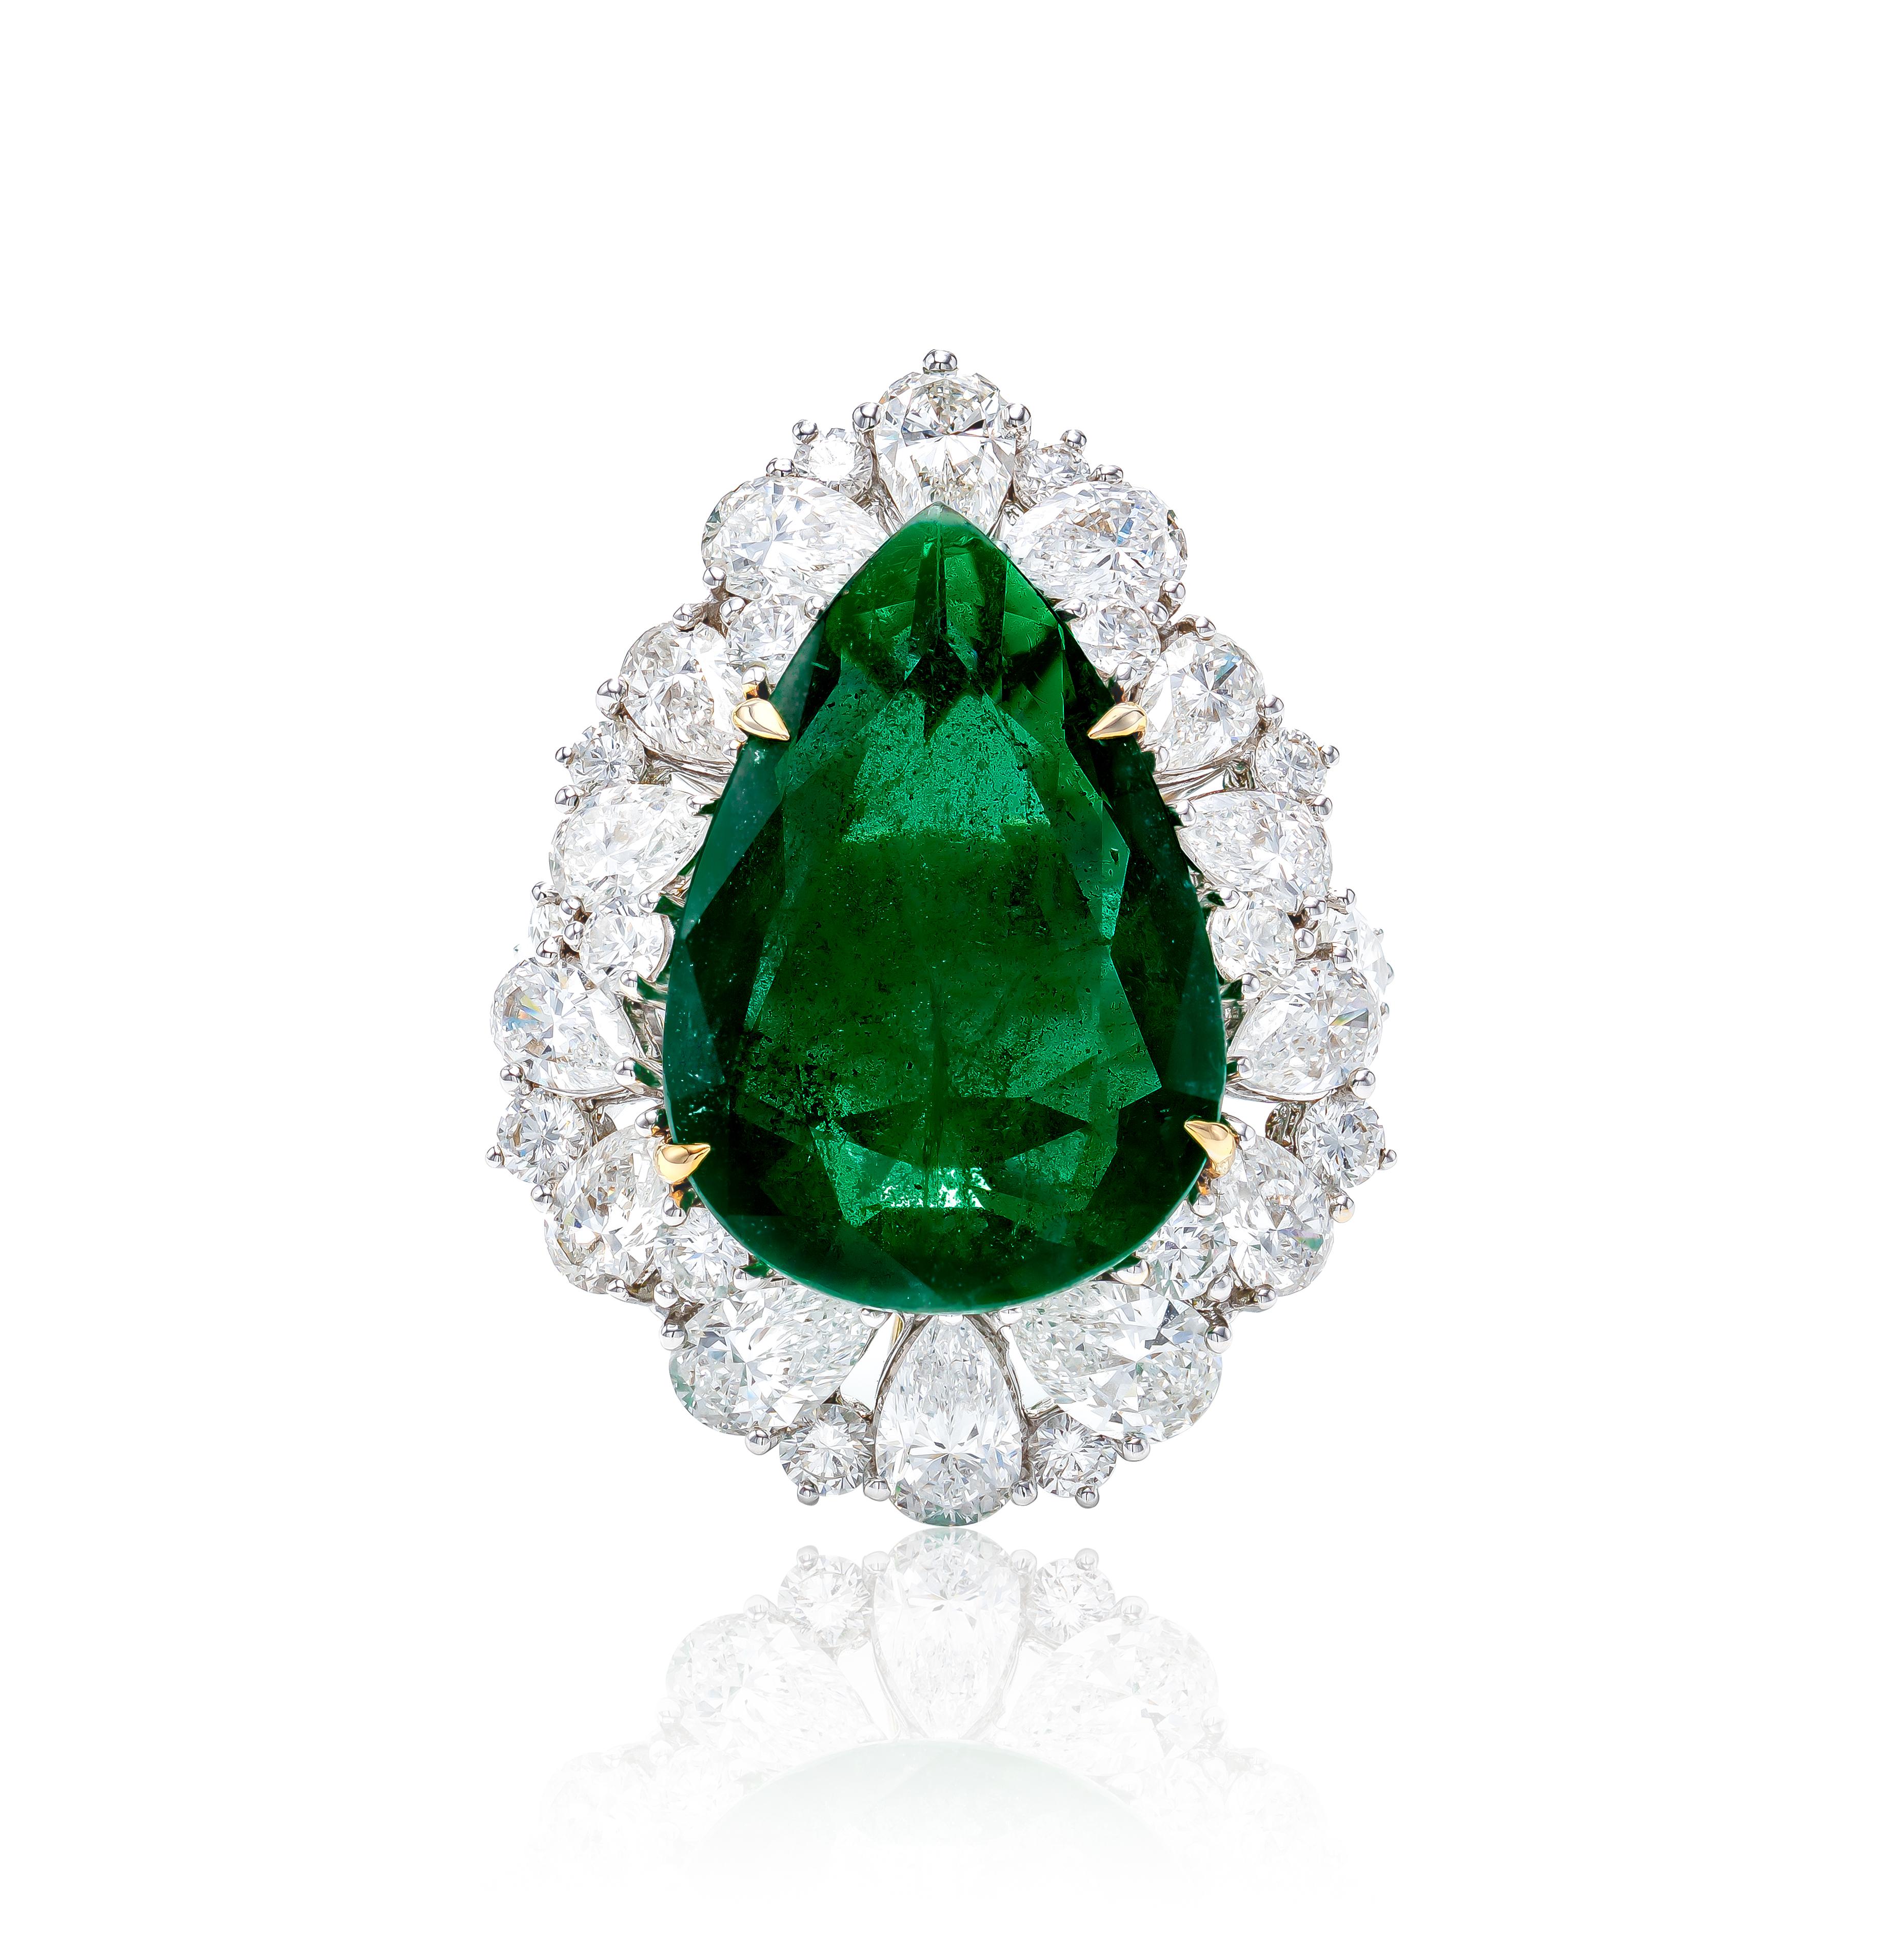 Contemporary 24.56 Carat Zambian Emerald Pear Shape Diamond Ring in 18k Gold